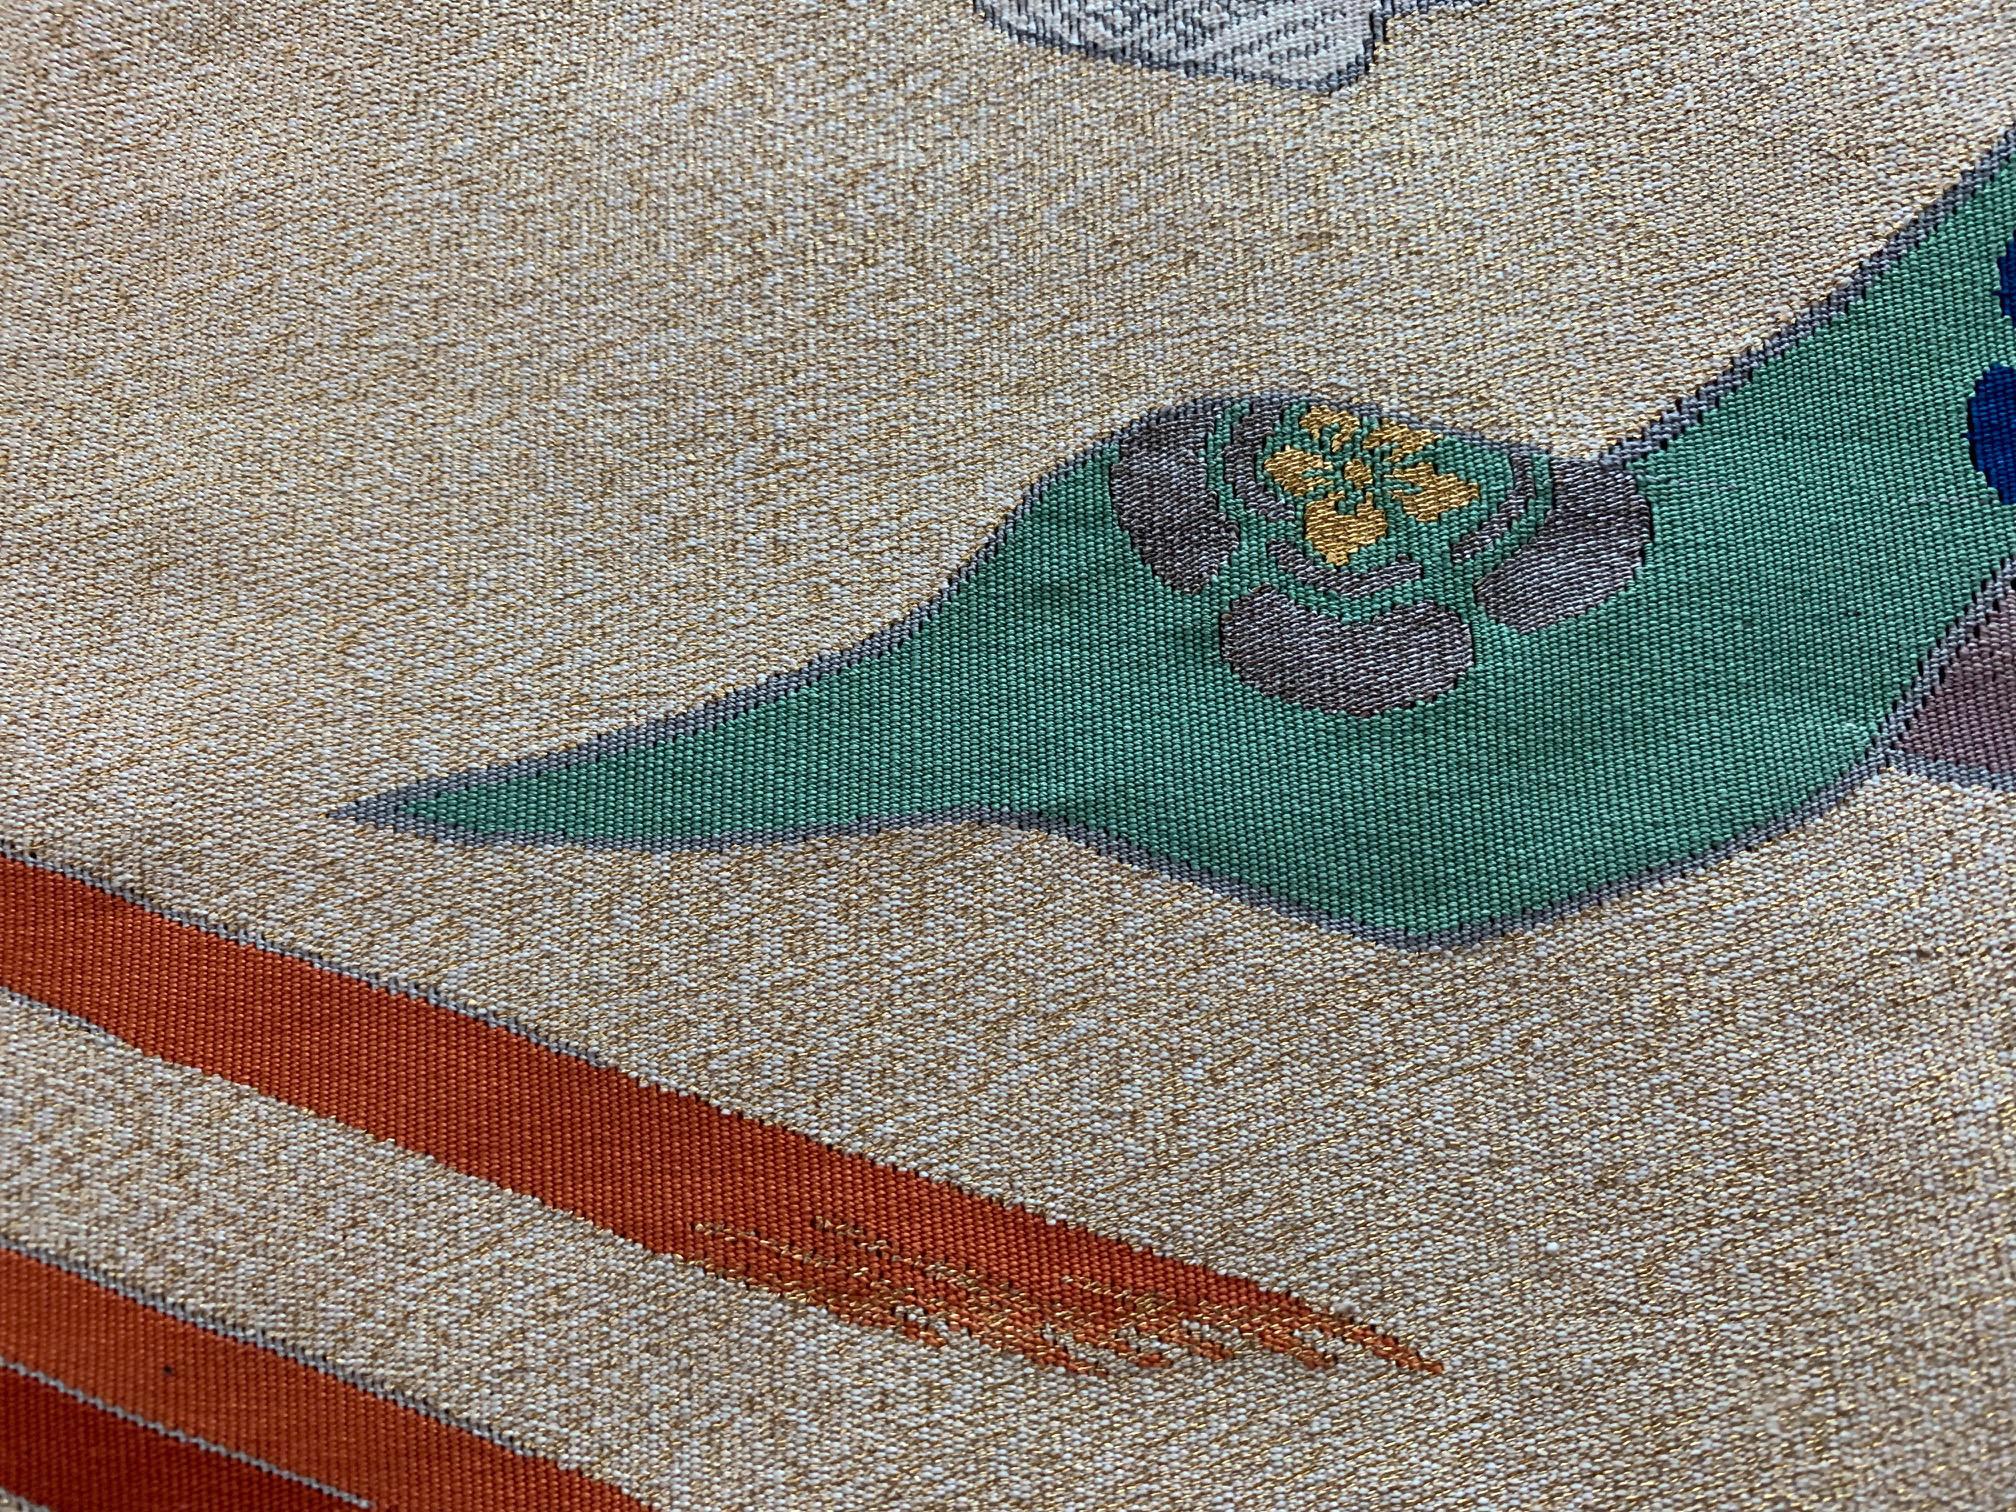 Early 20th Century Japanese Antique Fukusa Textile Art Meiji Period